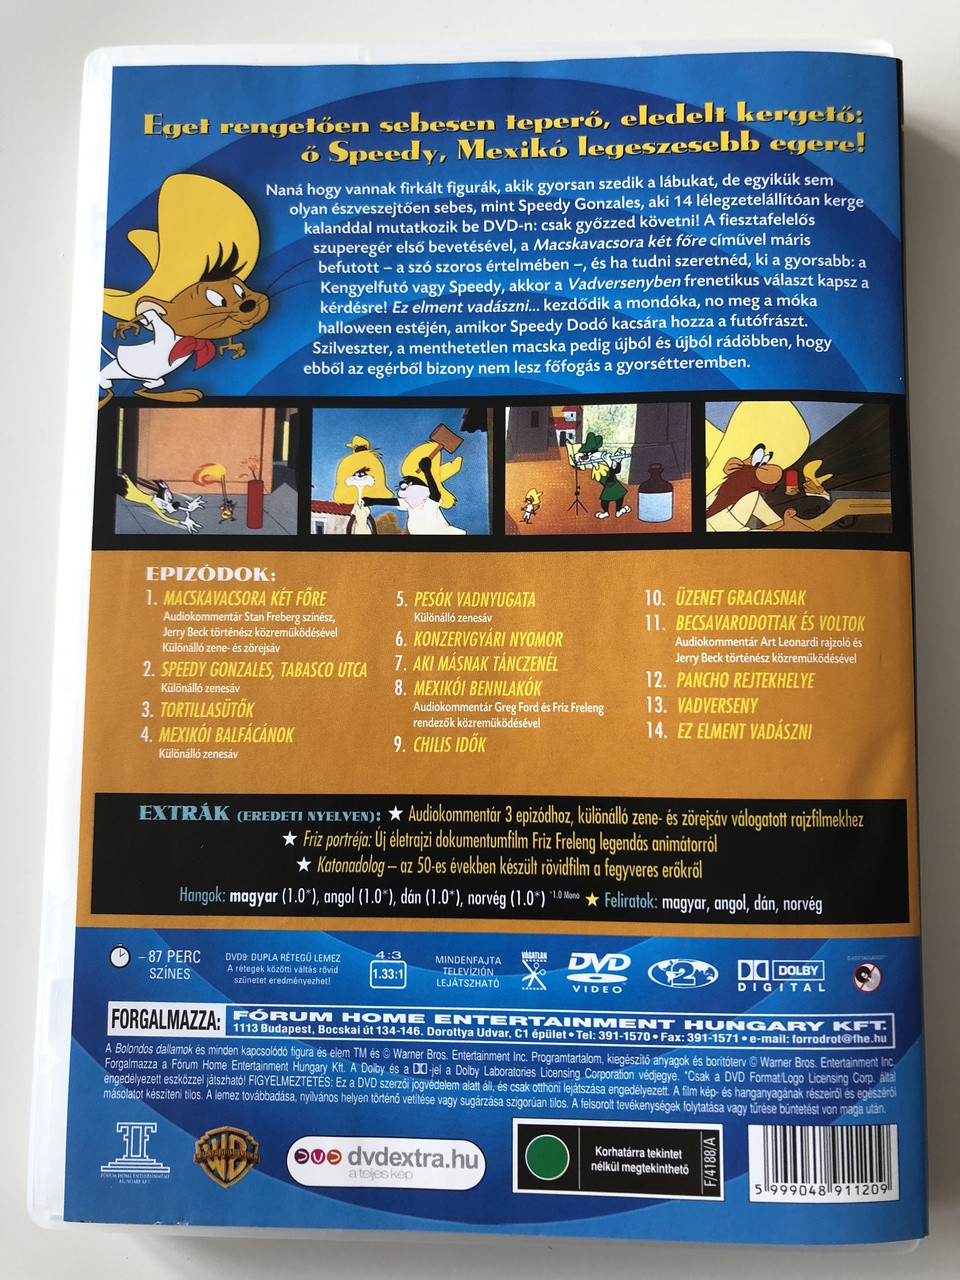 Looney Tunes Collection - Best of Speedy Gonzales - Volume 1 DVD 2006  Bolondos Dallamok - Speedy Gonzales Gyűjteménye 1. rész / Created by Friz  Freleng, Hawley Pratt / 14 Episodes on this DVD - bibleinmylanguage